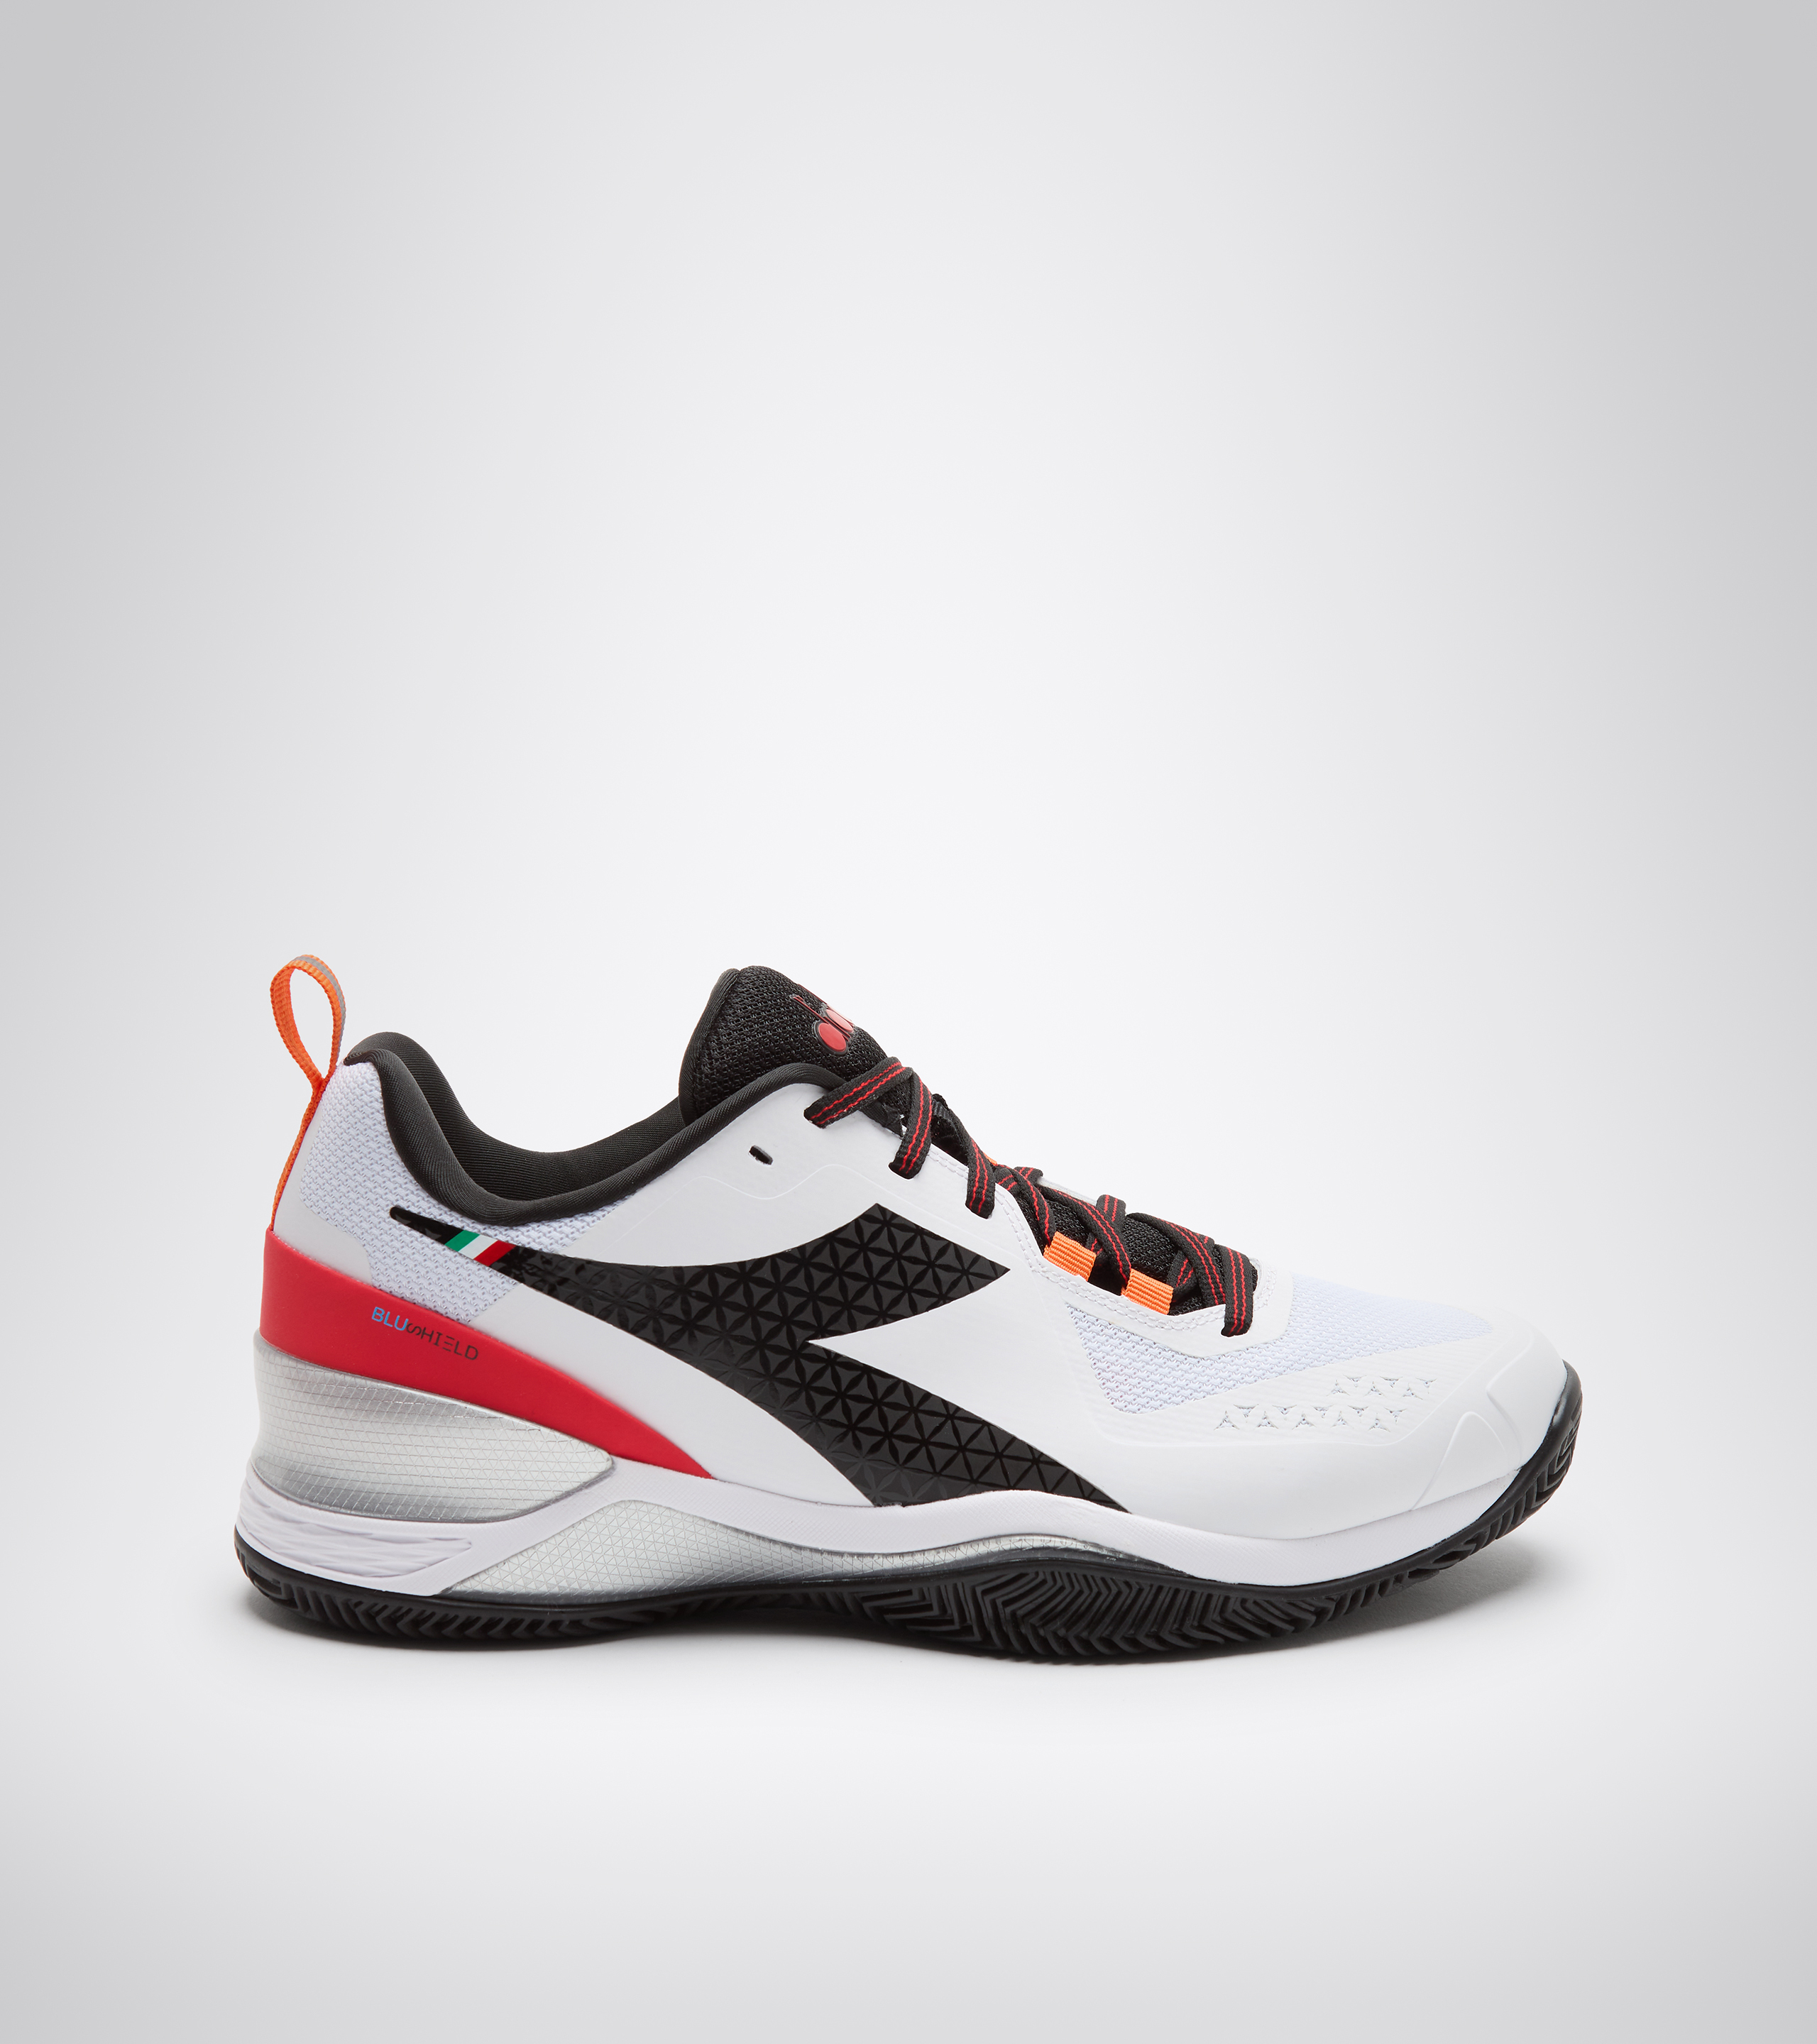 BLUSHIELD TORNEO CLAY Tennis shoes - Men - Diadora Online Store US